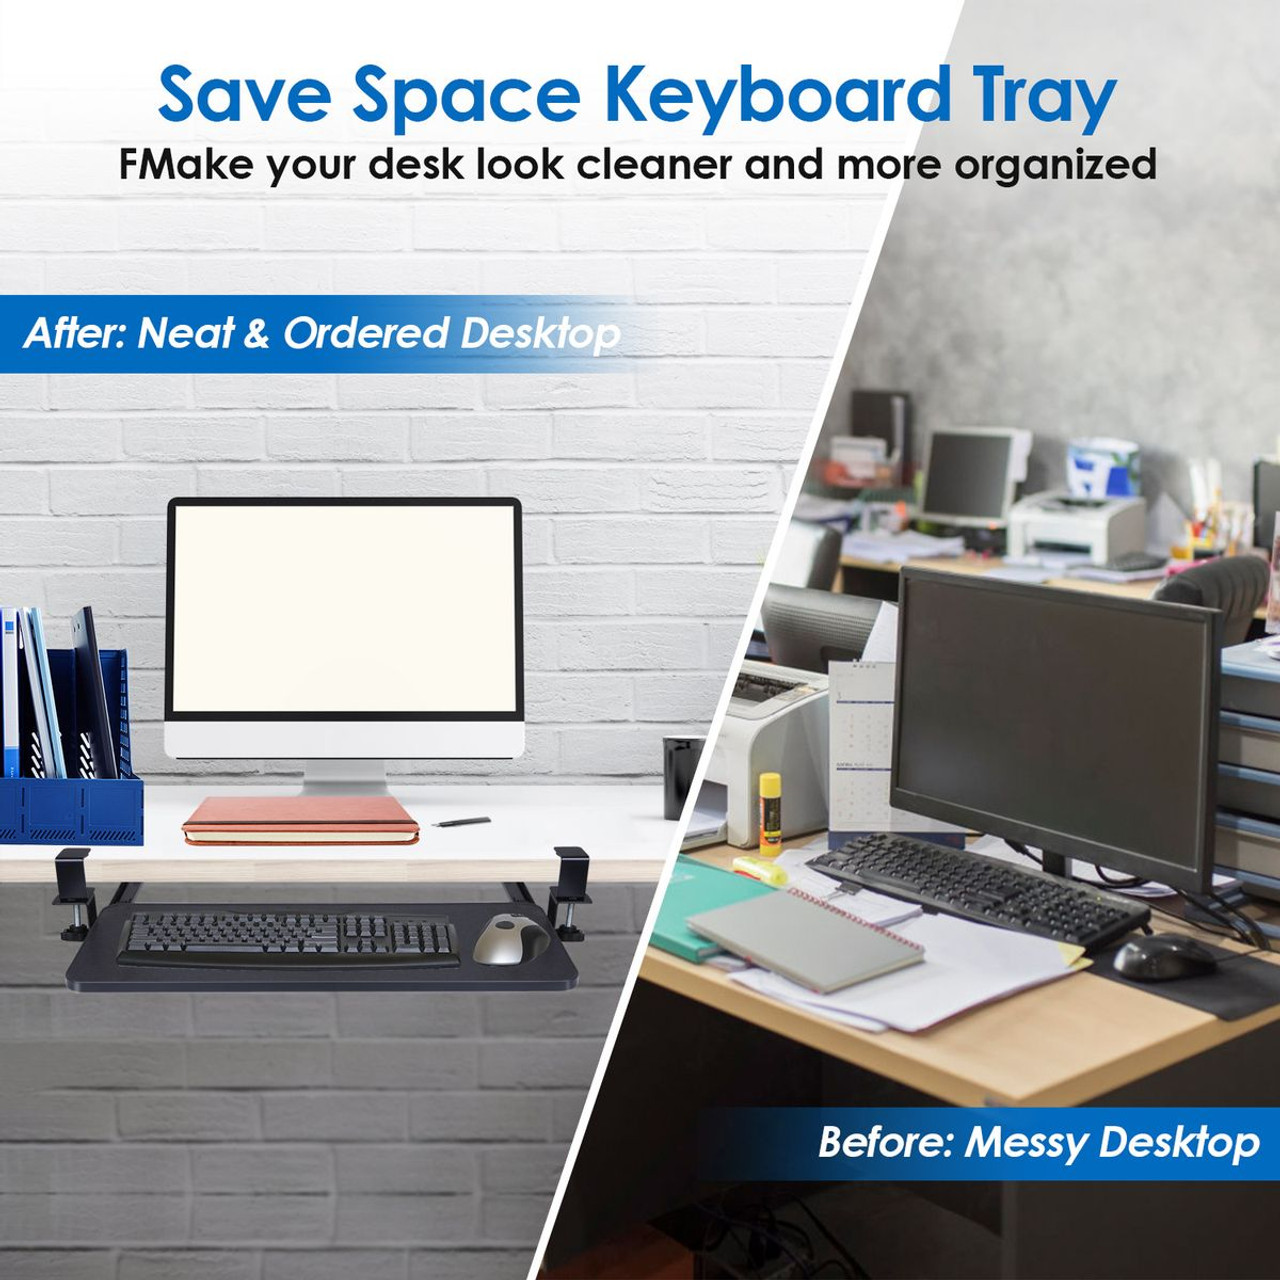 NewHome™ Sliding Under Desk Keyboard Mouse Tray product image